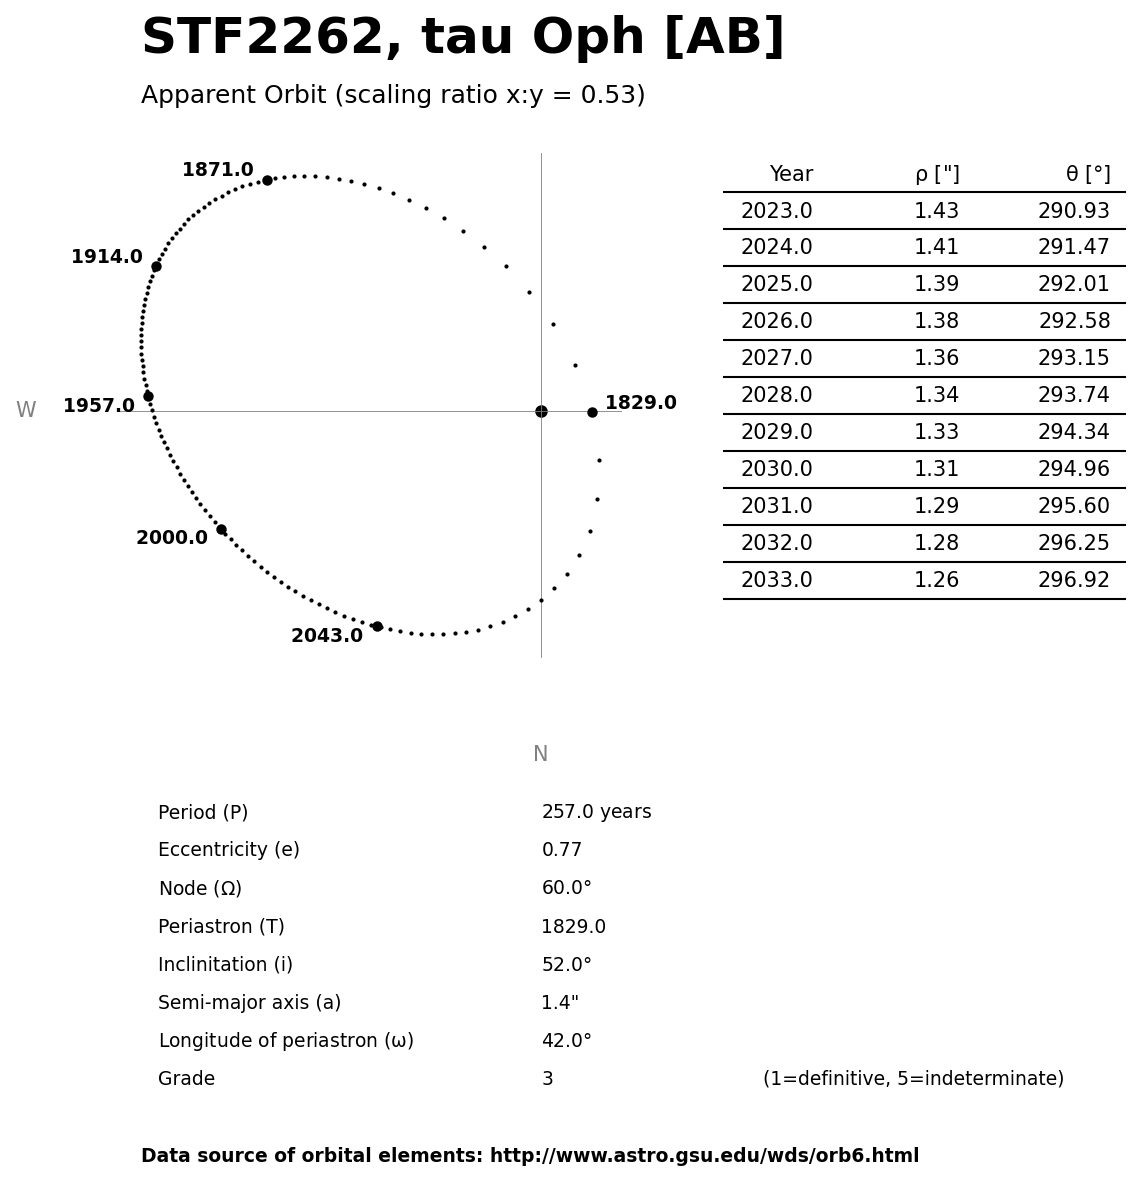 ../images/binary-star-orbits/STF2262-AB-orbit.jpg